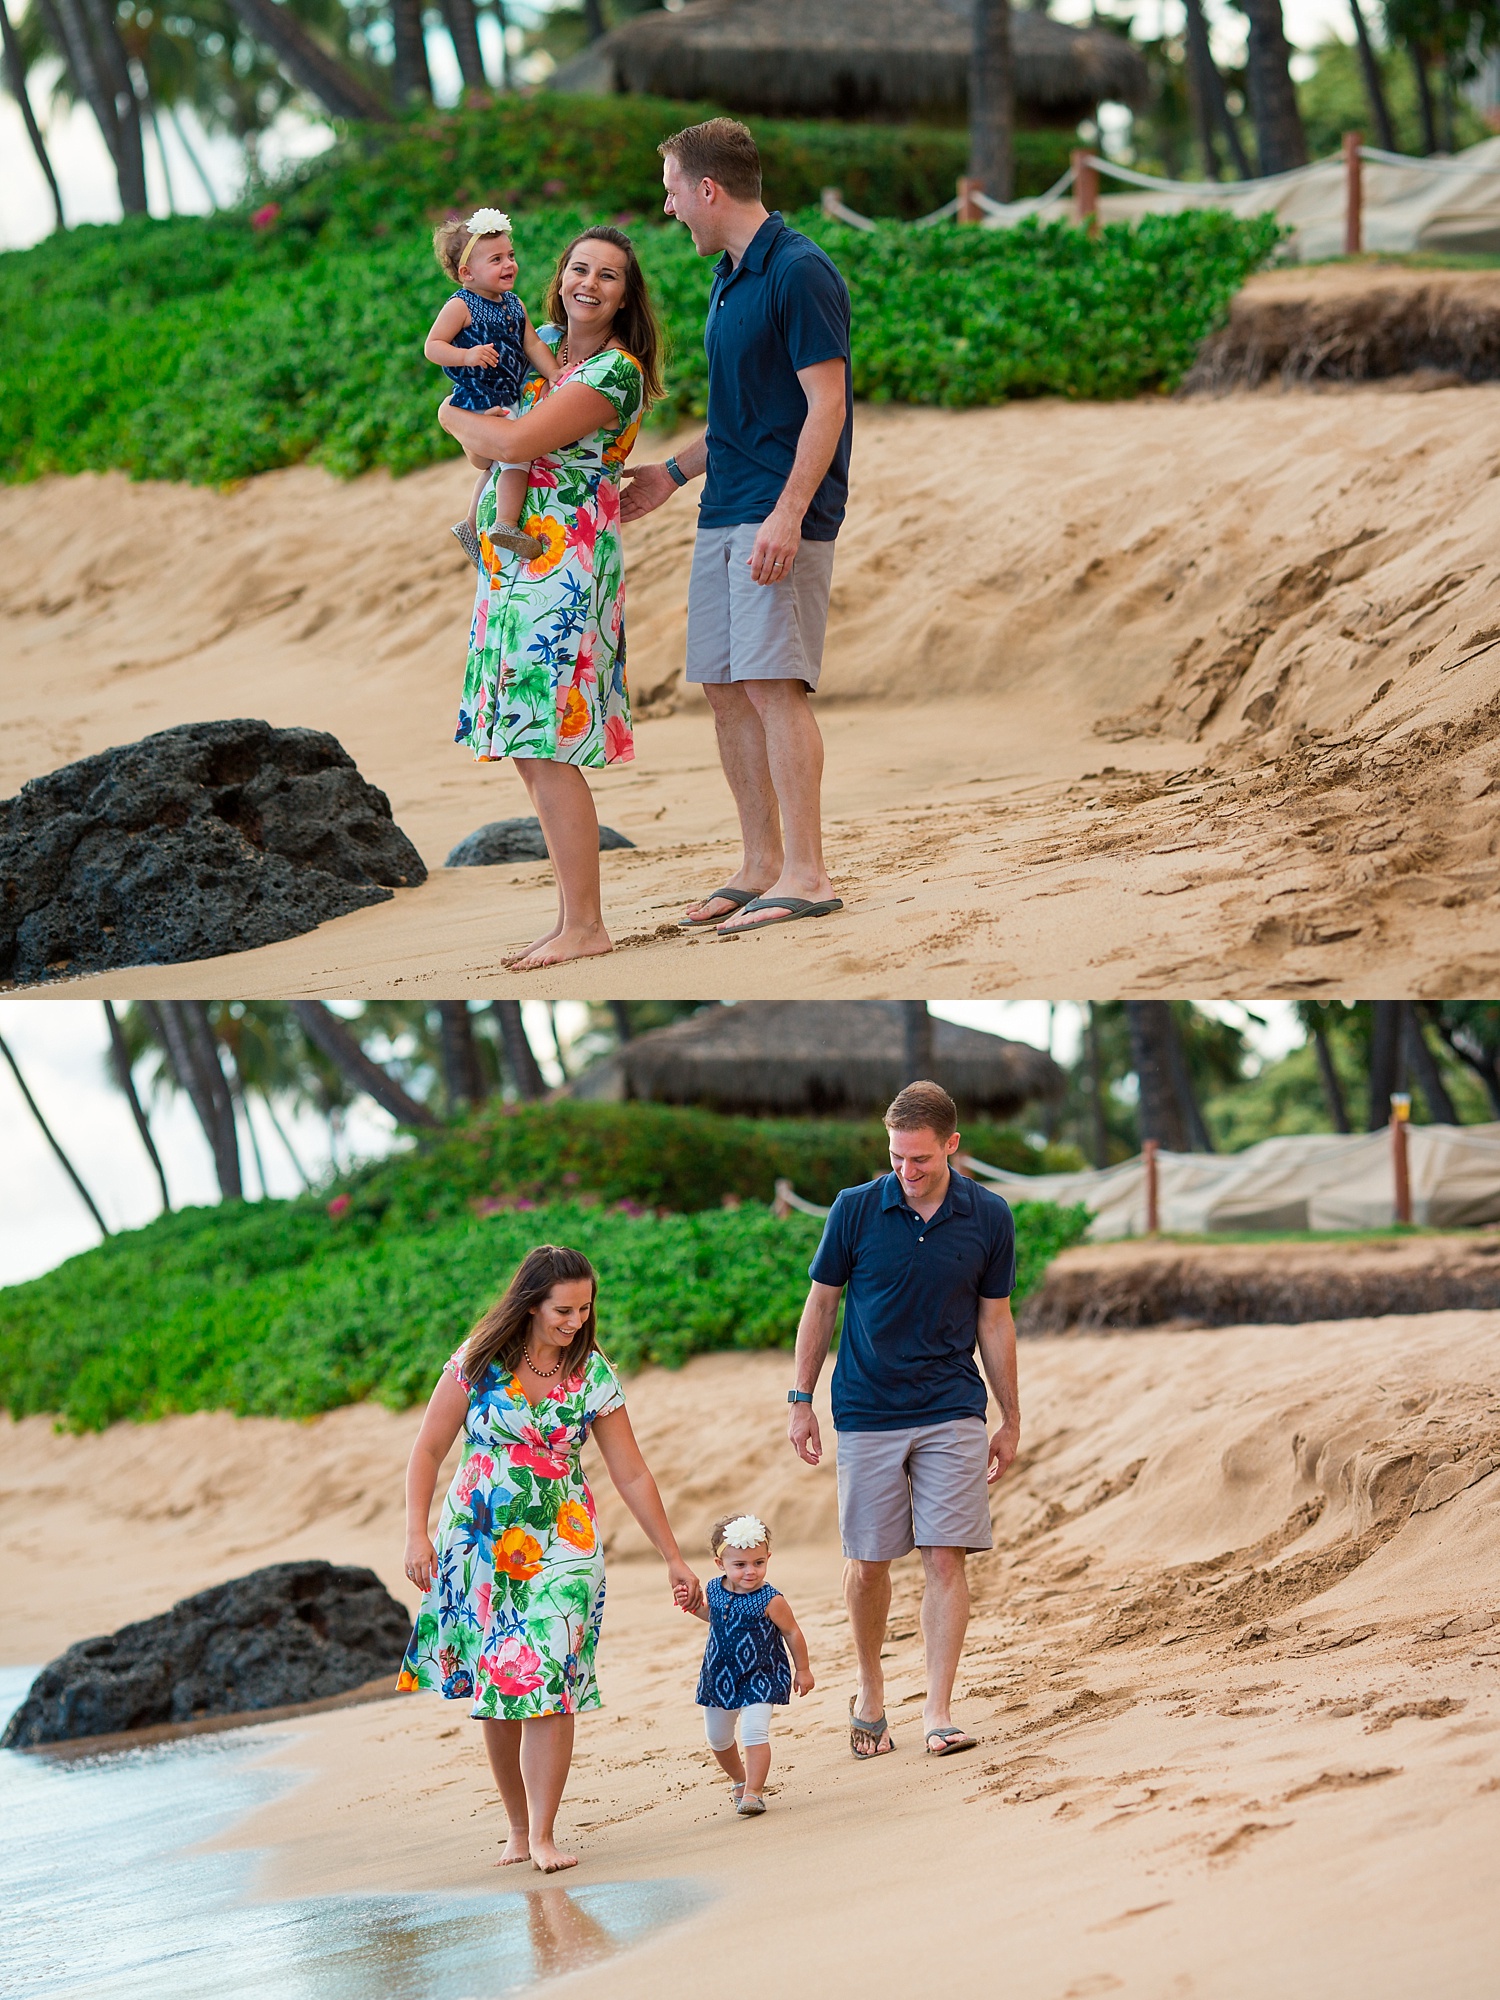 Hyatt Regency Maui Hawaii sunset beach family photoshoot